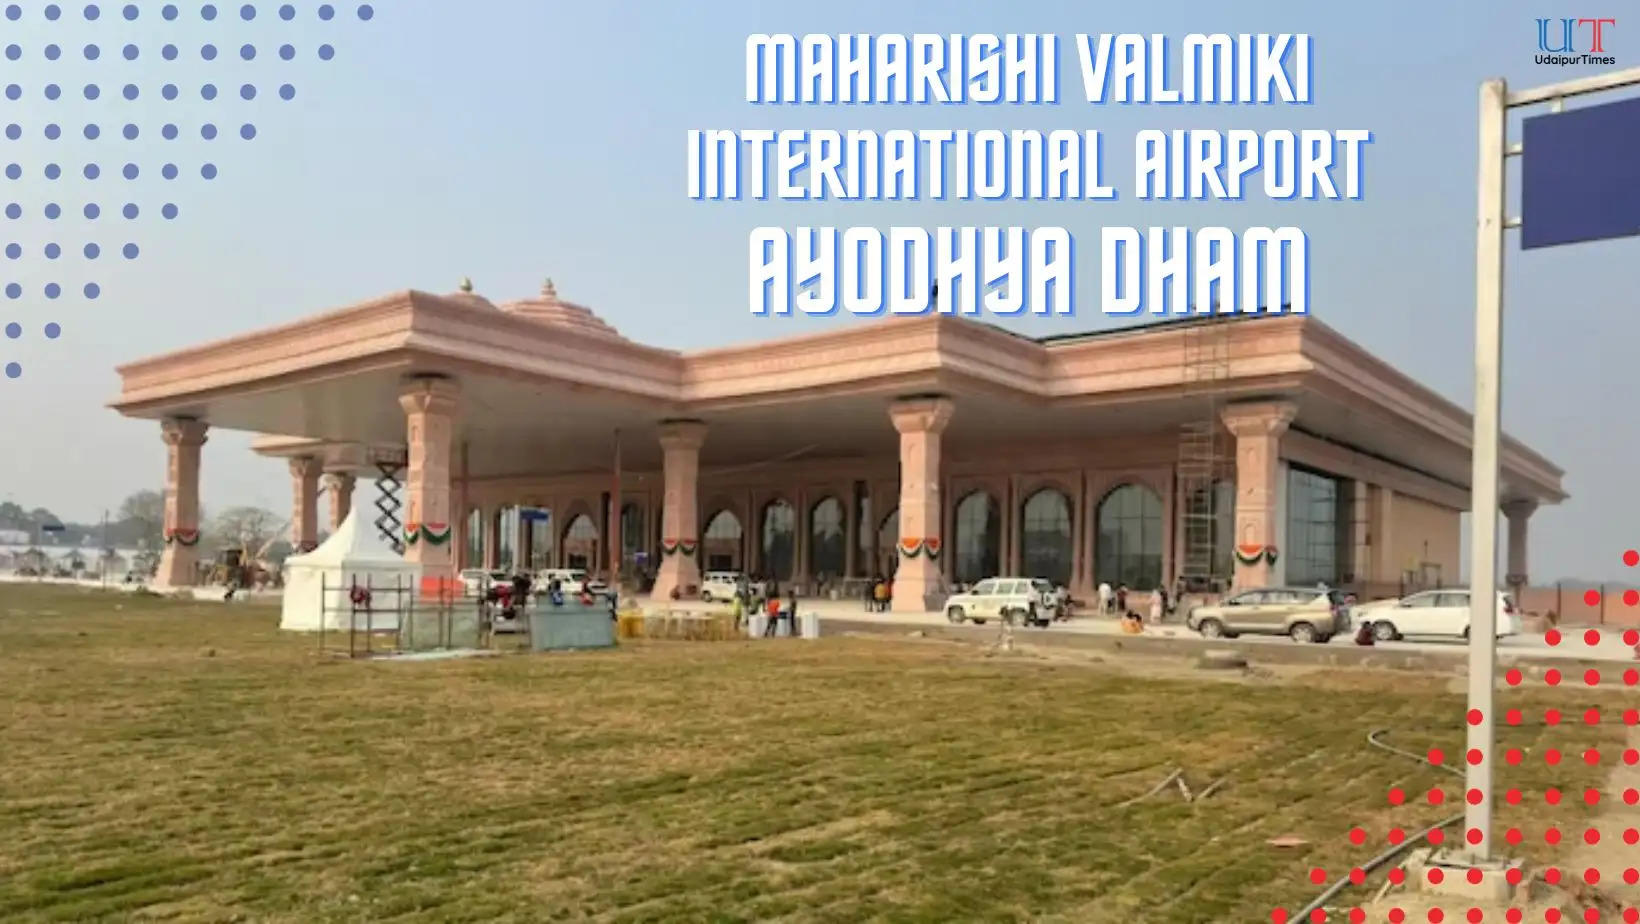 UP government renames Ayodhya International Airport to Maharishi Valmiki International Airport Ayodhya Dham